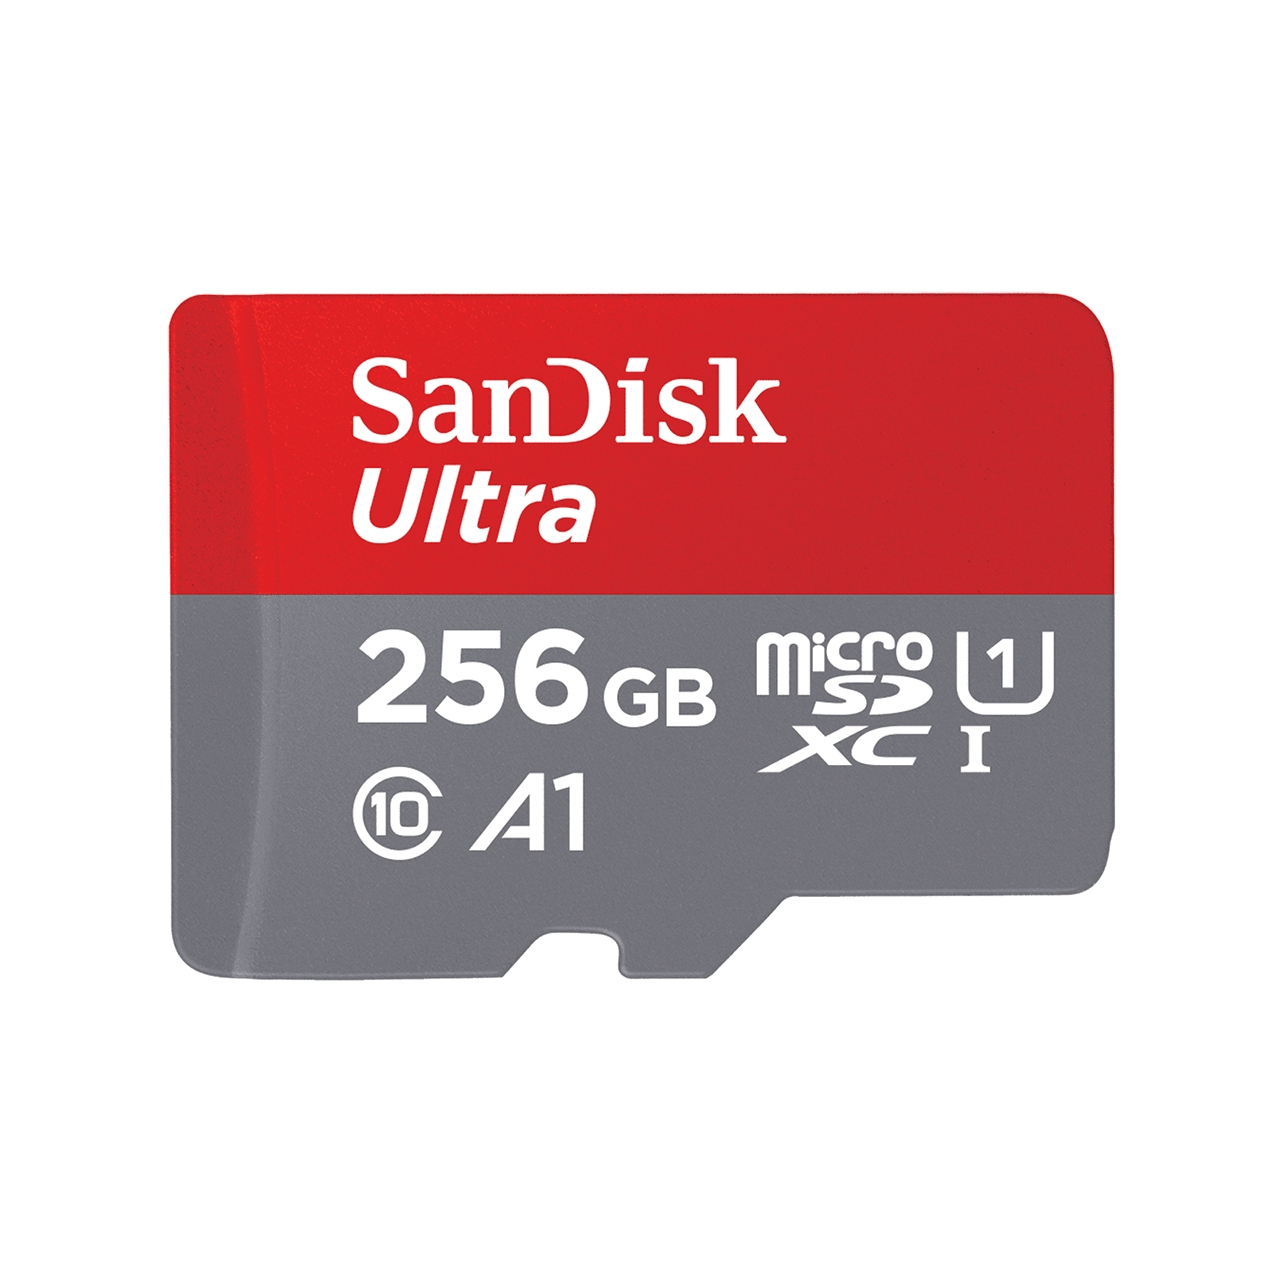 SanDisk Ultra memory card 256 GB MicroSDXC Class 10